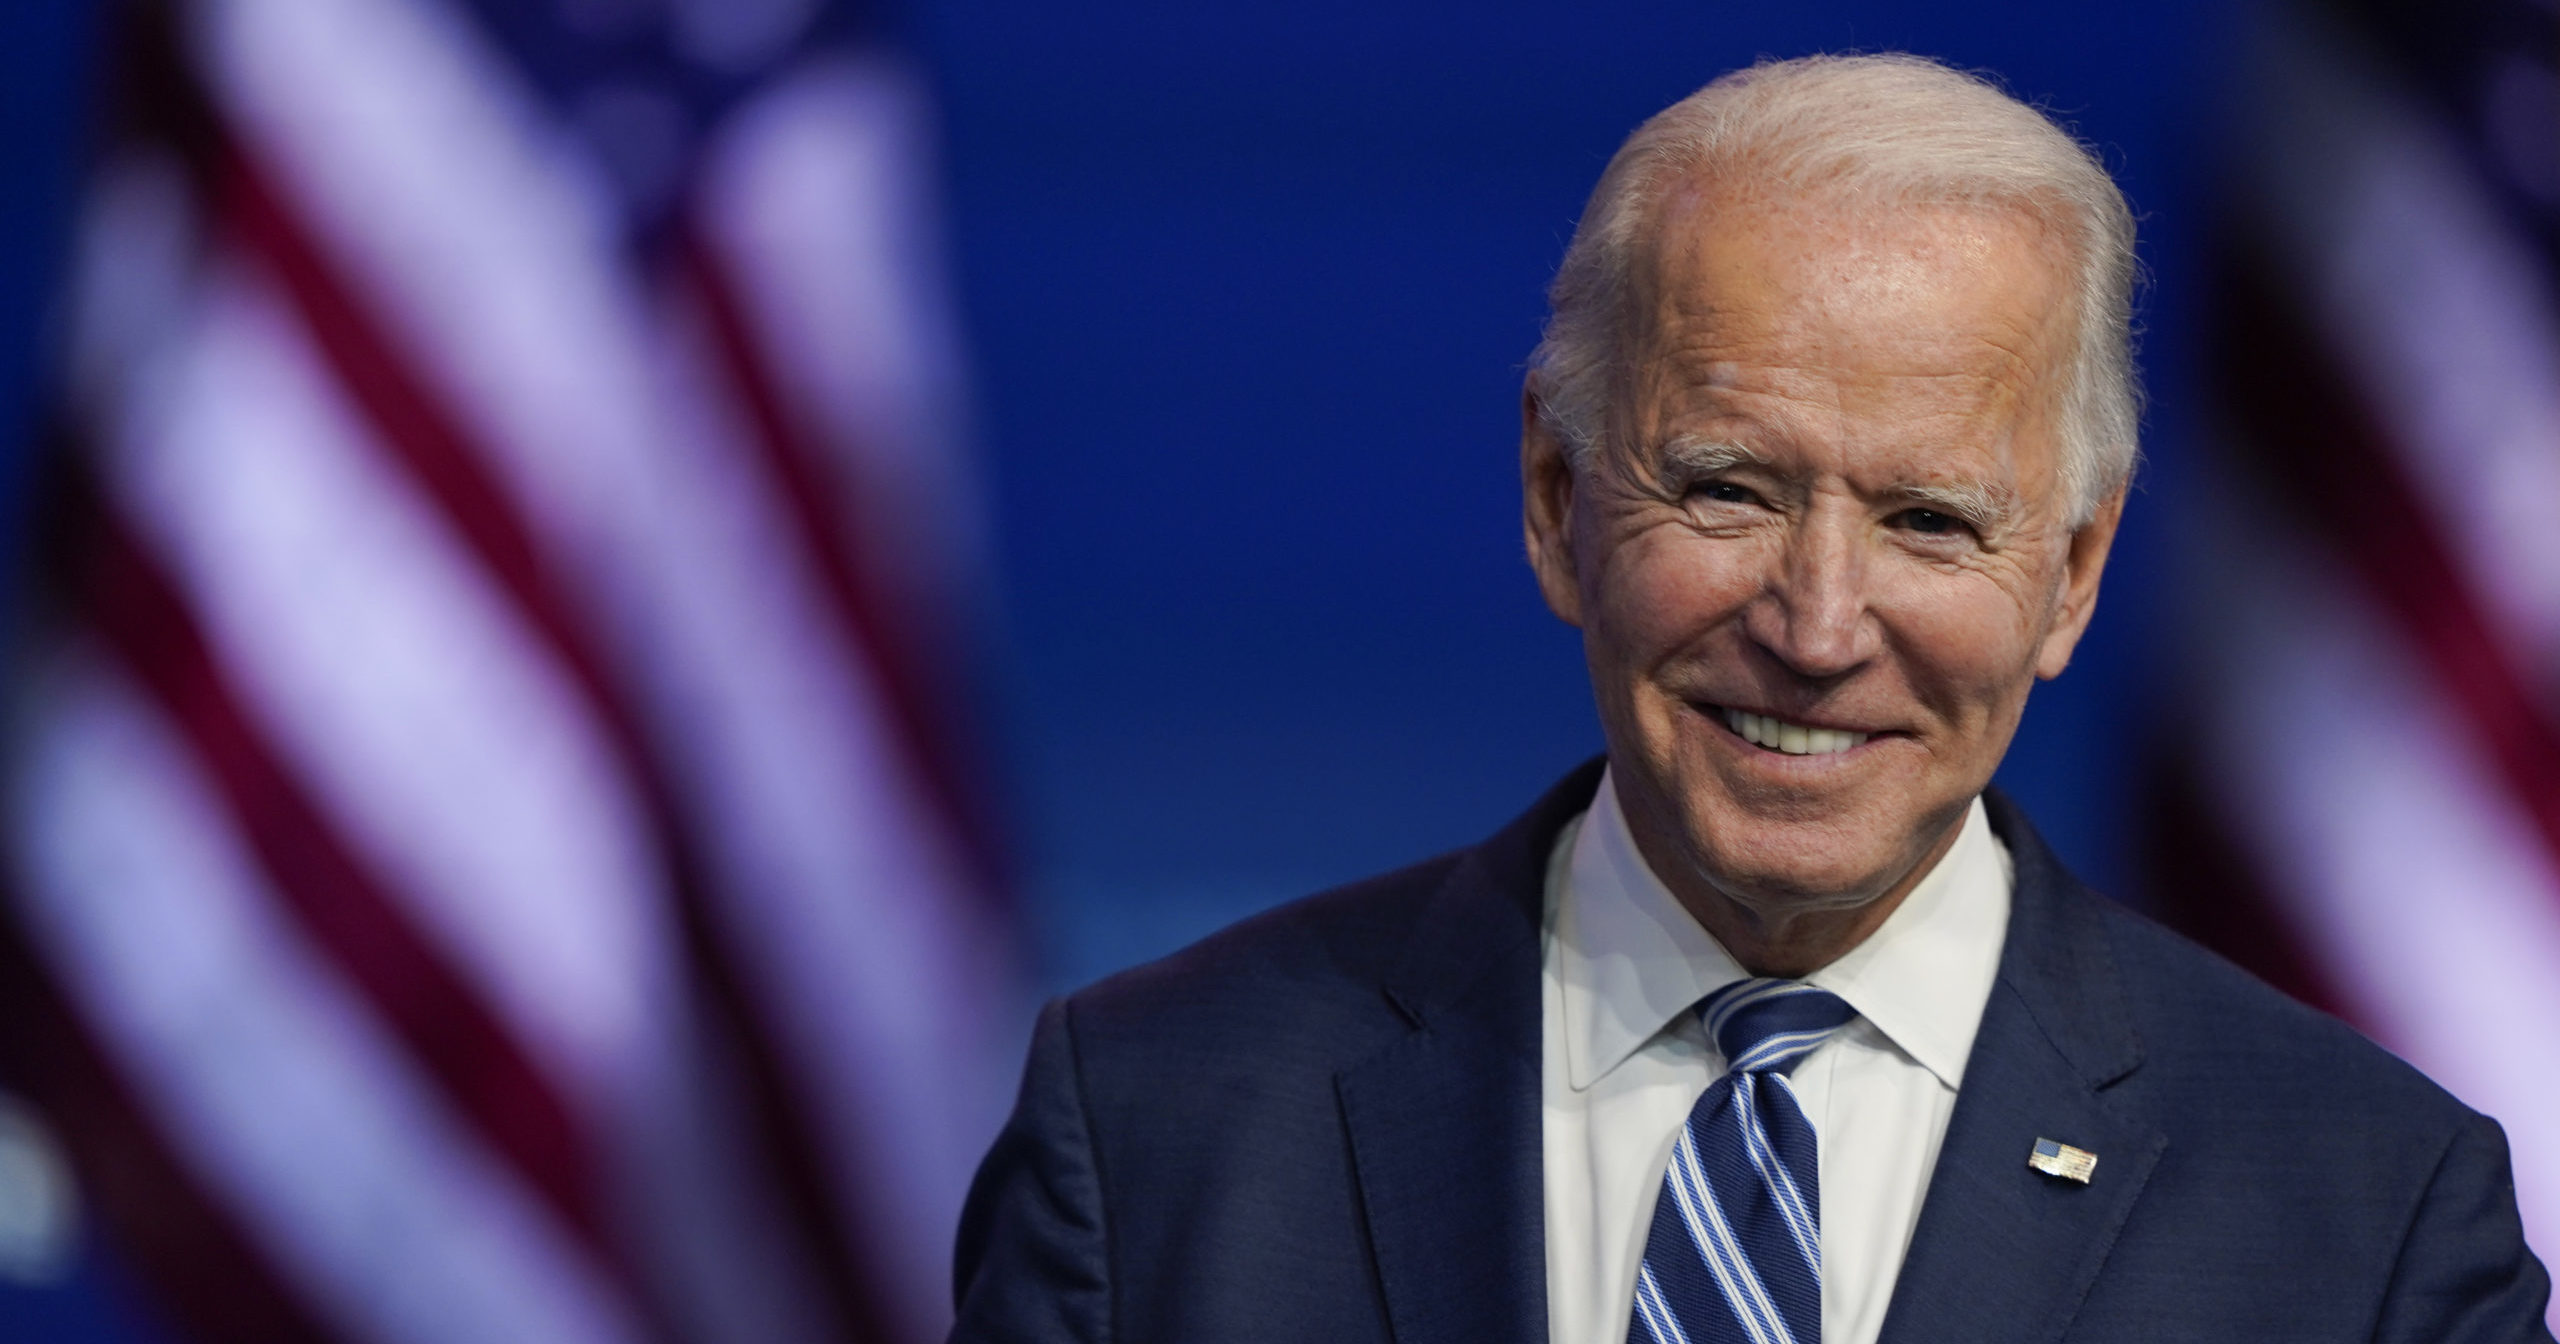 In this Nov. 10, 2020, file photo, Joe Biden smiles as he speaks at The Queen theater in Wilmington, Delaware.